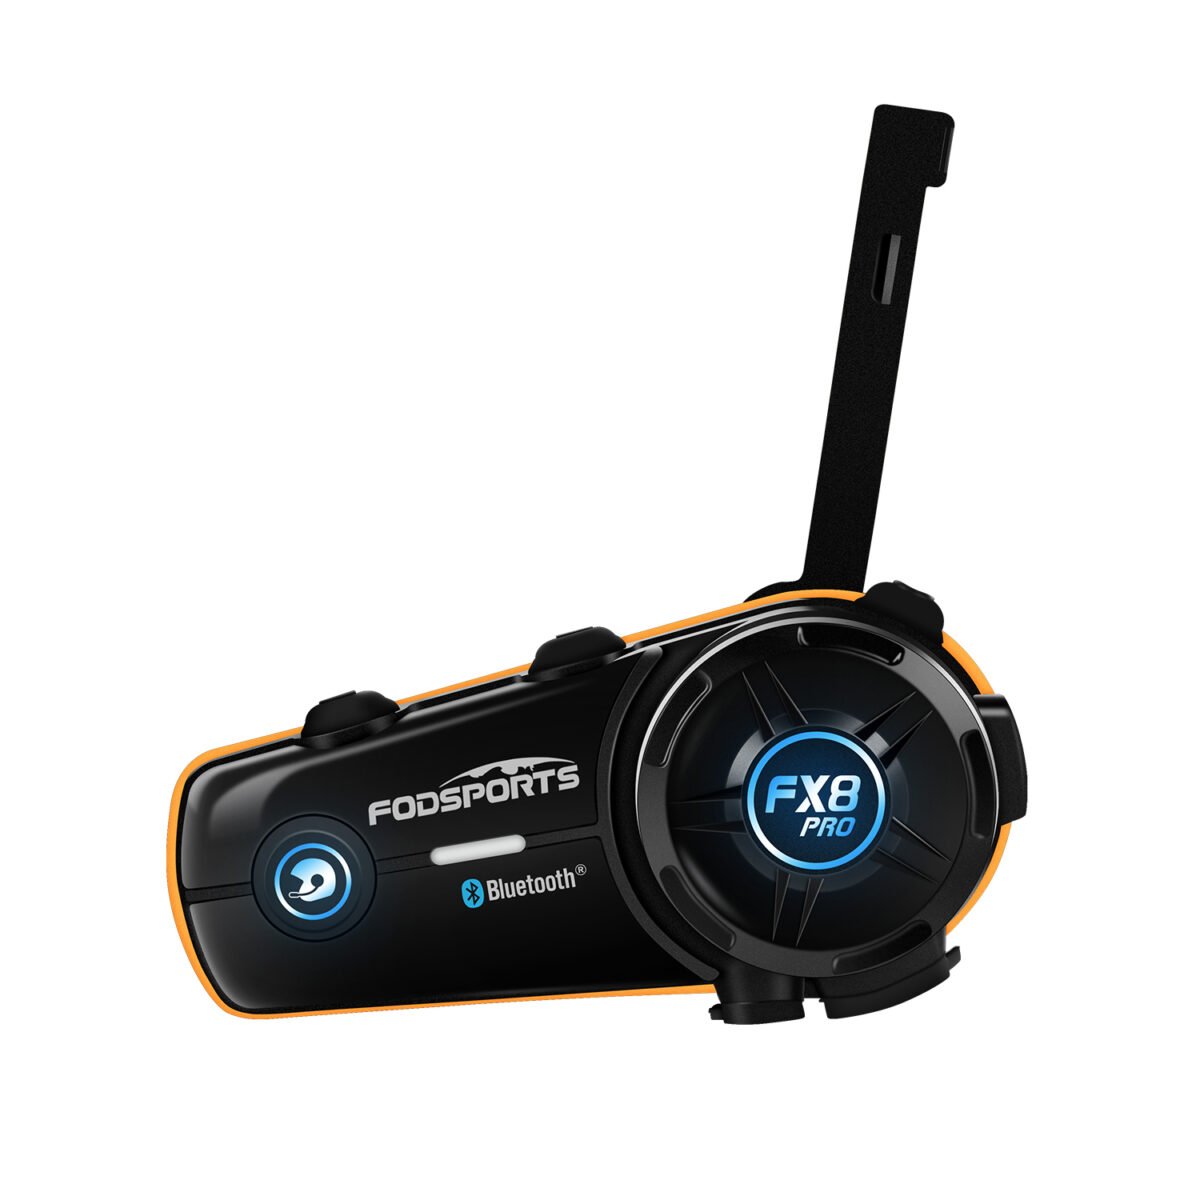 Fodsports FX8 PRO Motorcycle Bluetooth Intercom